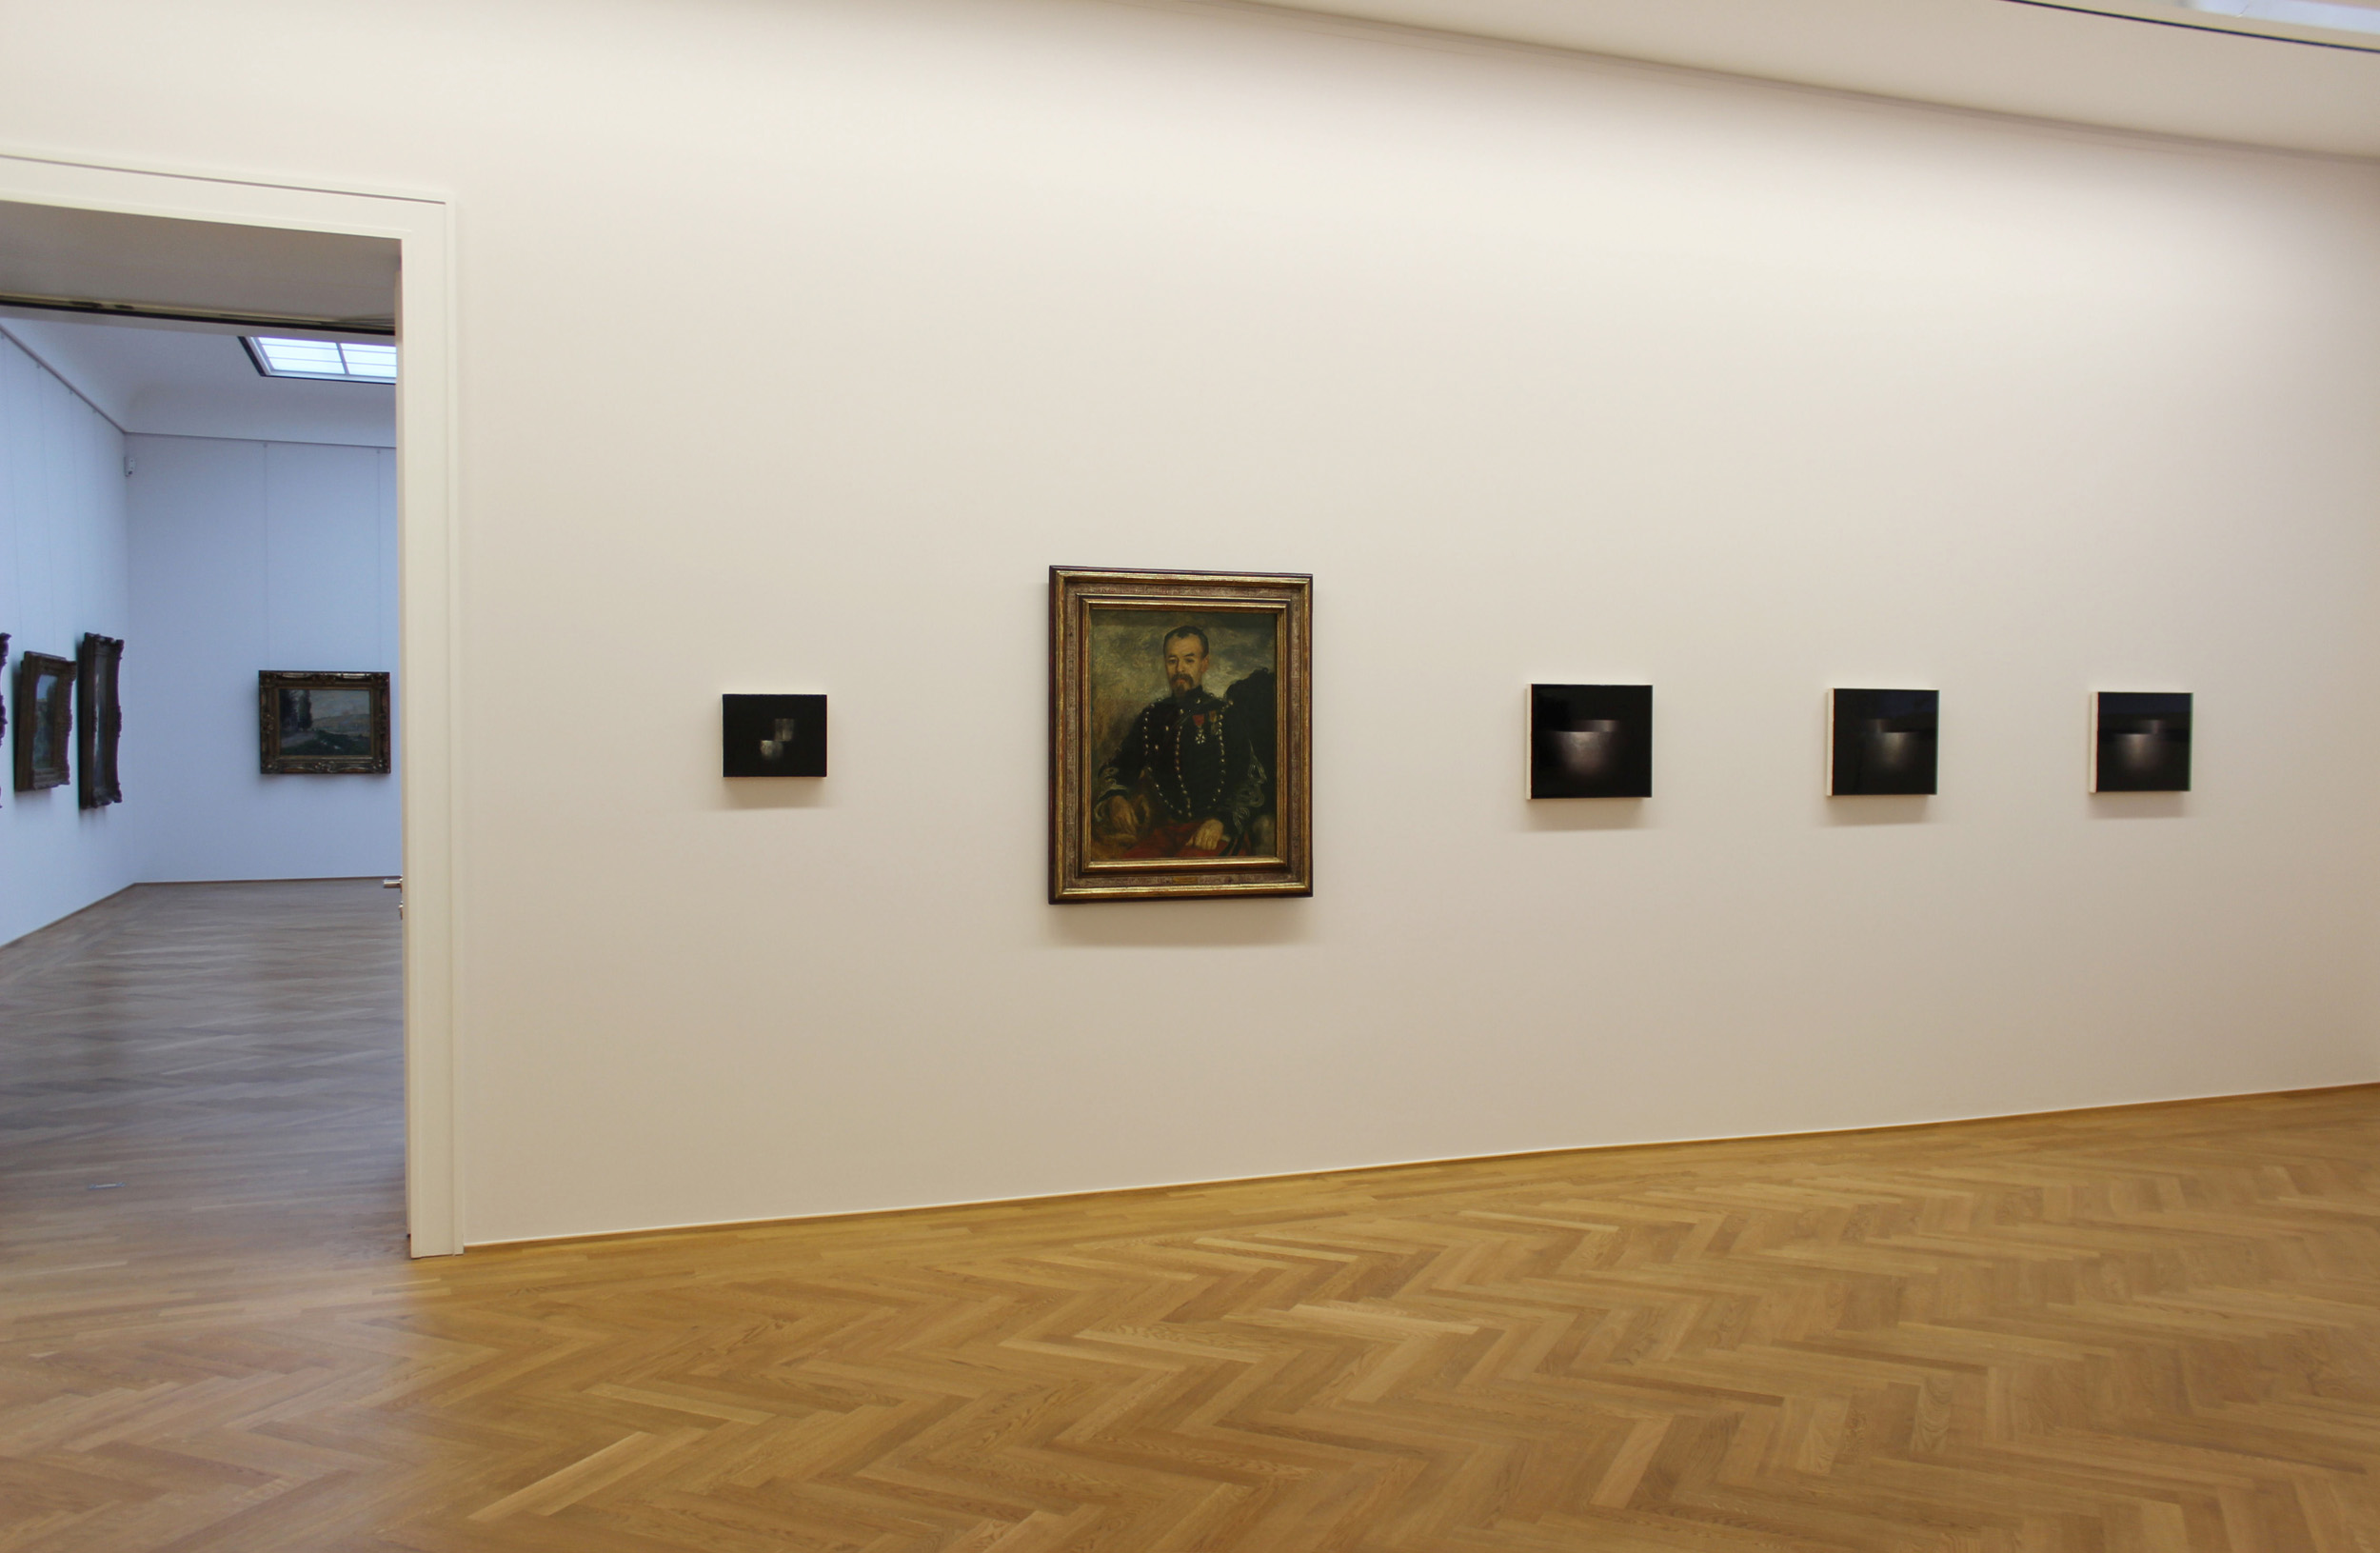 01 Galerie Neue Meister, Albertinum Dresden 2013.jpg